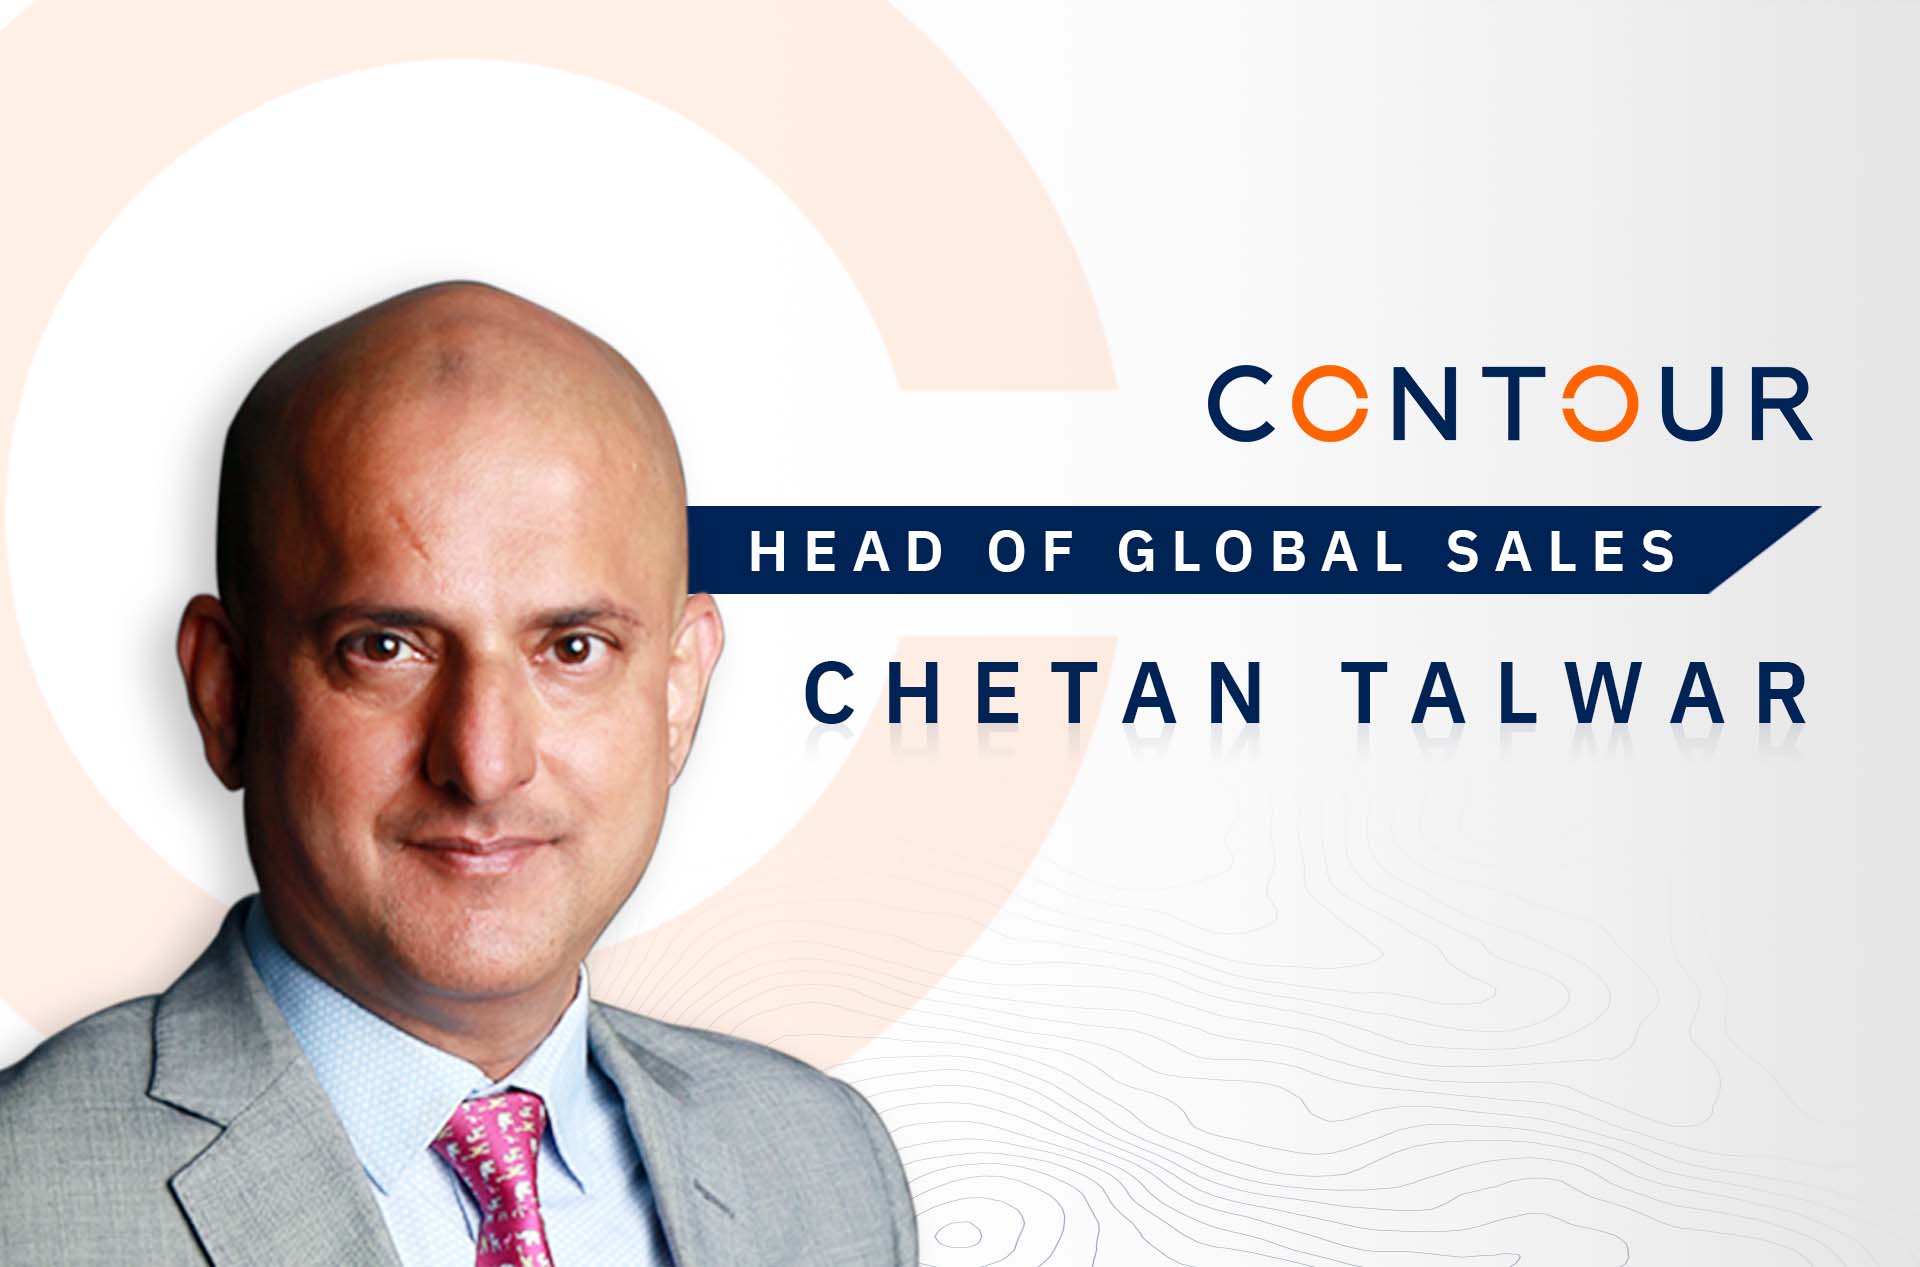 Digital trade finance network Contour names Chetan Talwar as Head of Global Sales